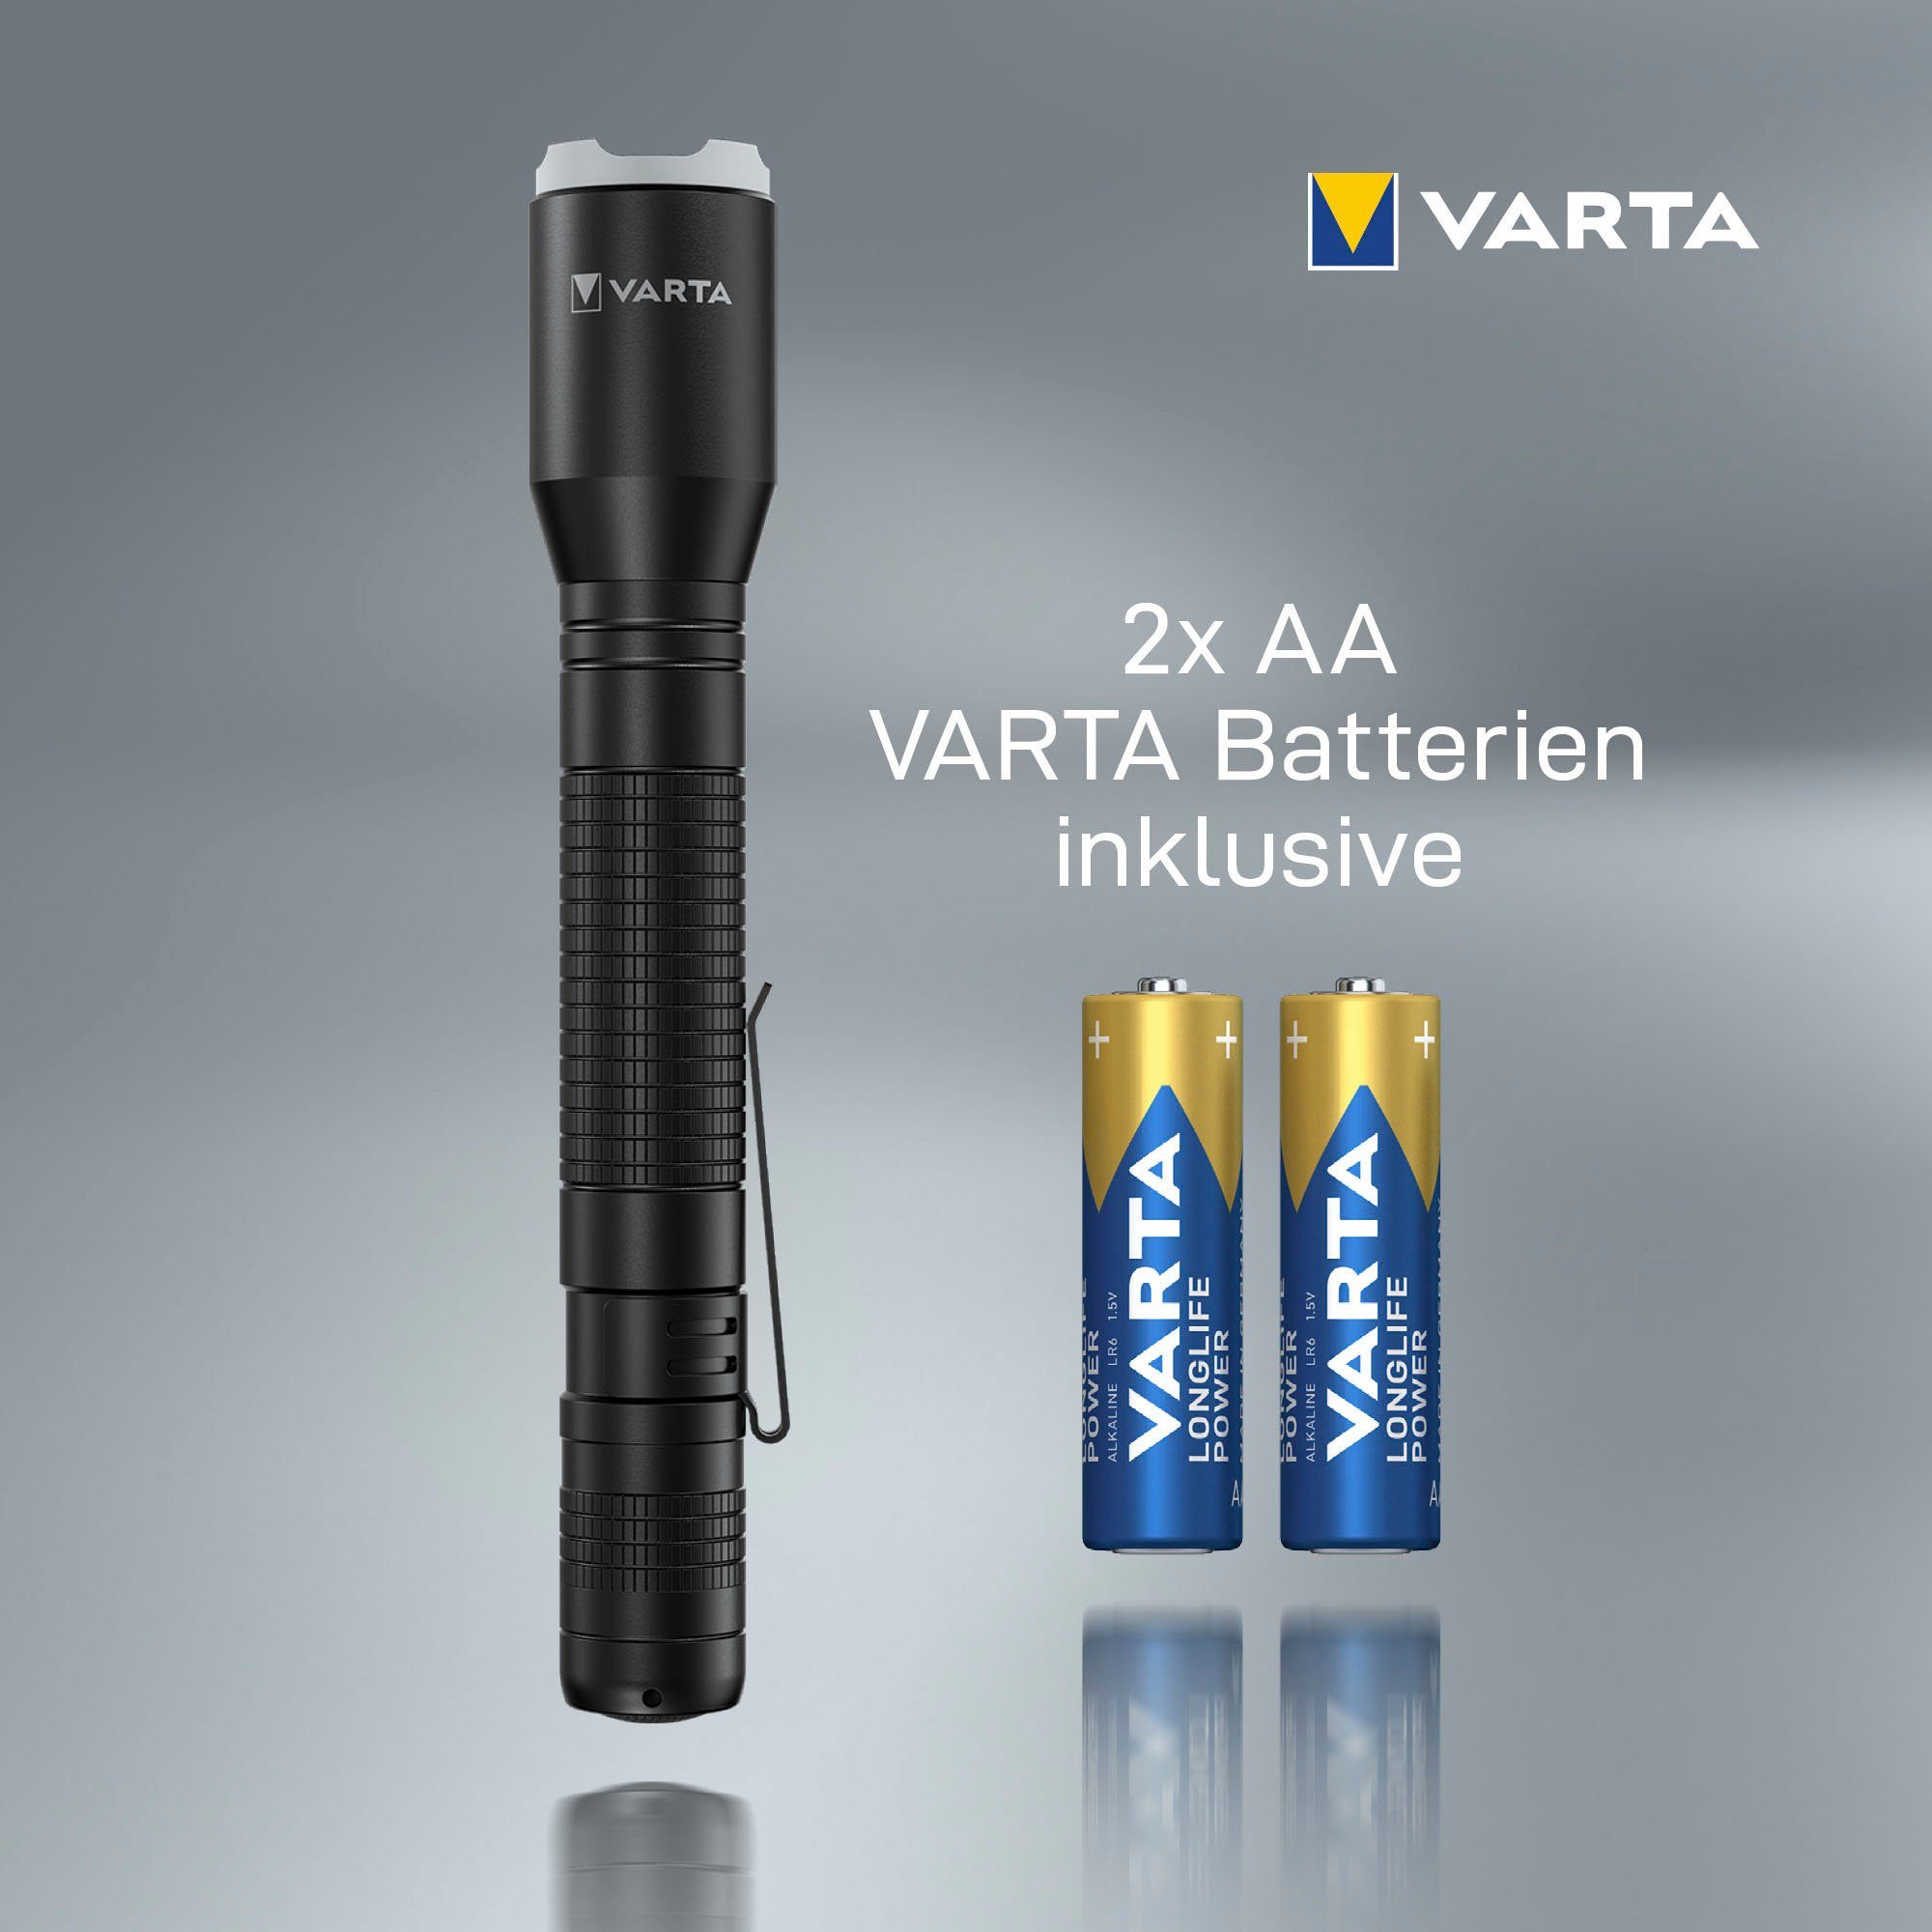 VARTA Taschenlampe Aluminium Light F20 Pro (1-St), Eloxiertes  Aluminiumgehäuse, strukturierte Gehäuseoberfläche für maximalen Grip | Taschenlampen